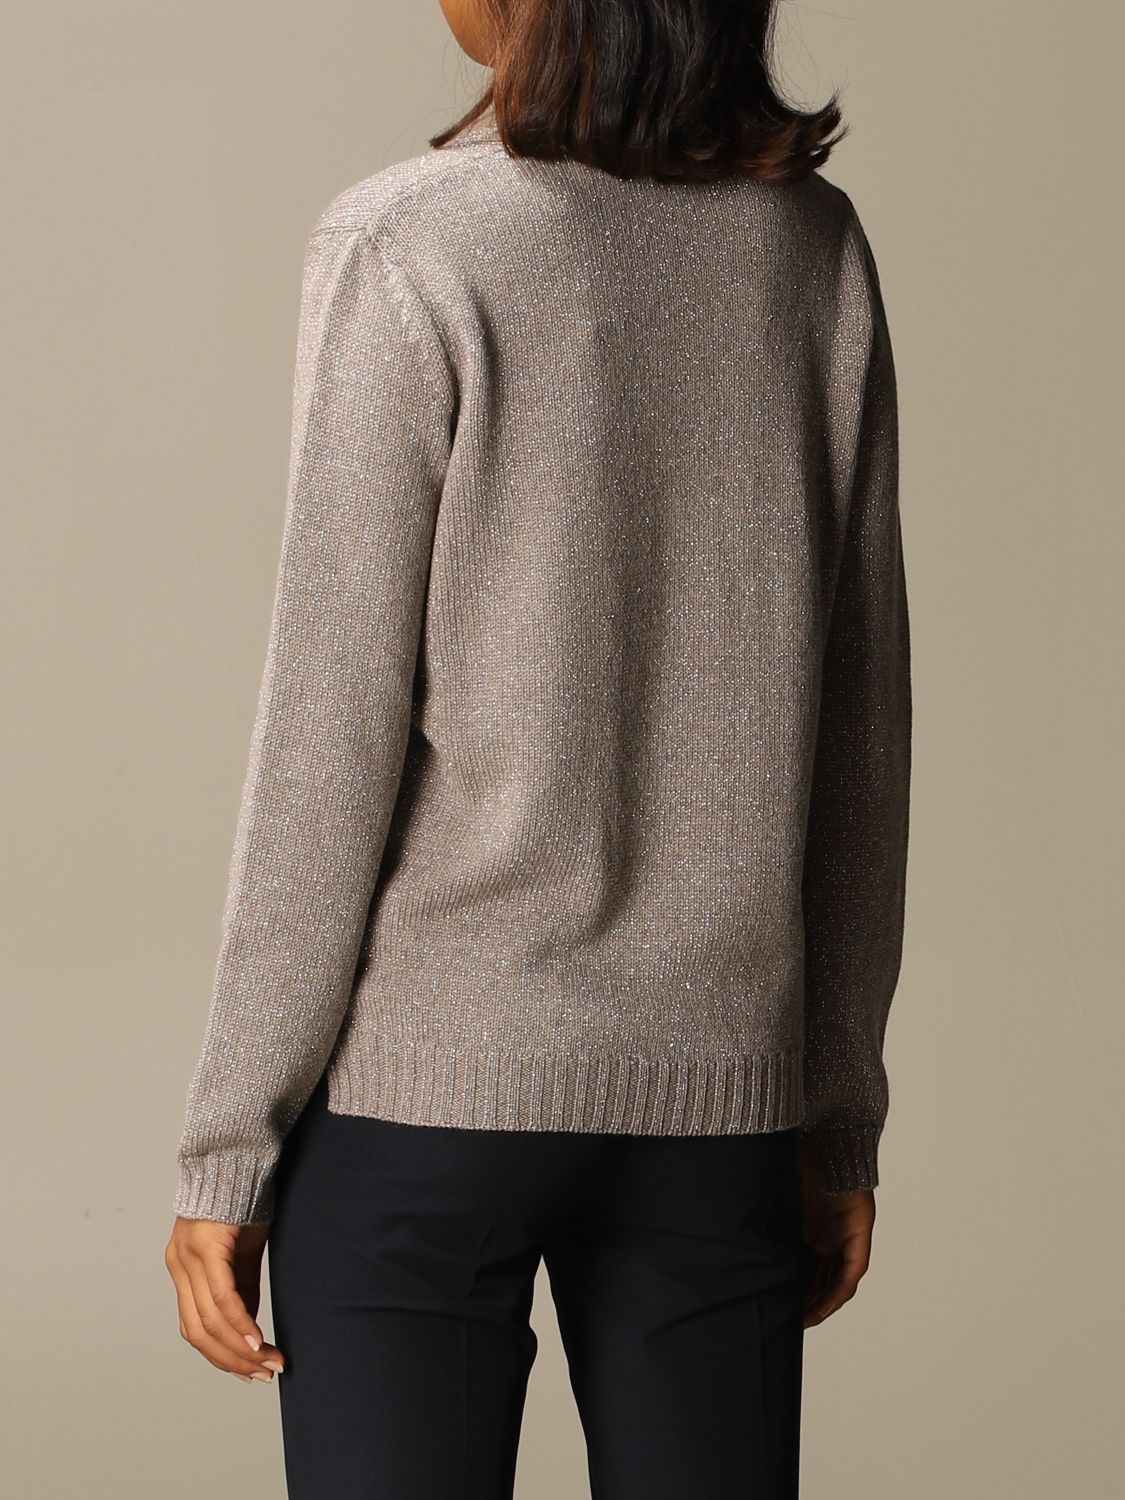 GRAN SASSO: Sweater women | Sweater Gran Sasso Women Dove Grey ...